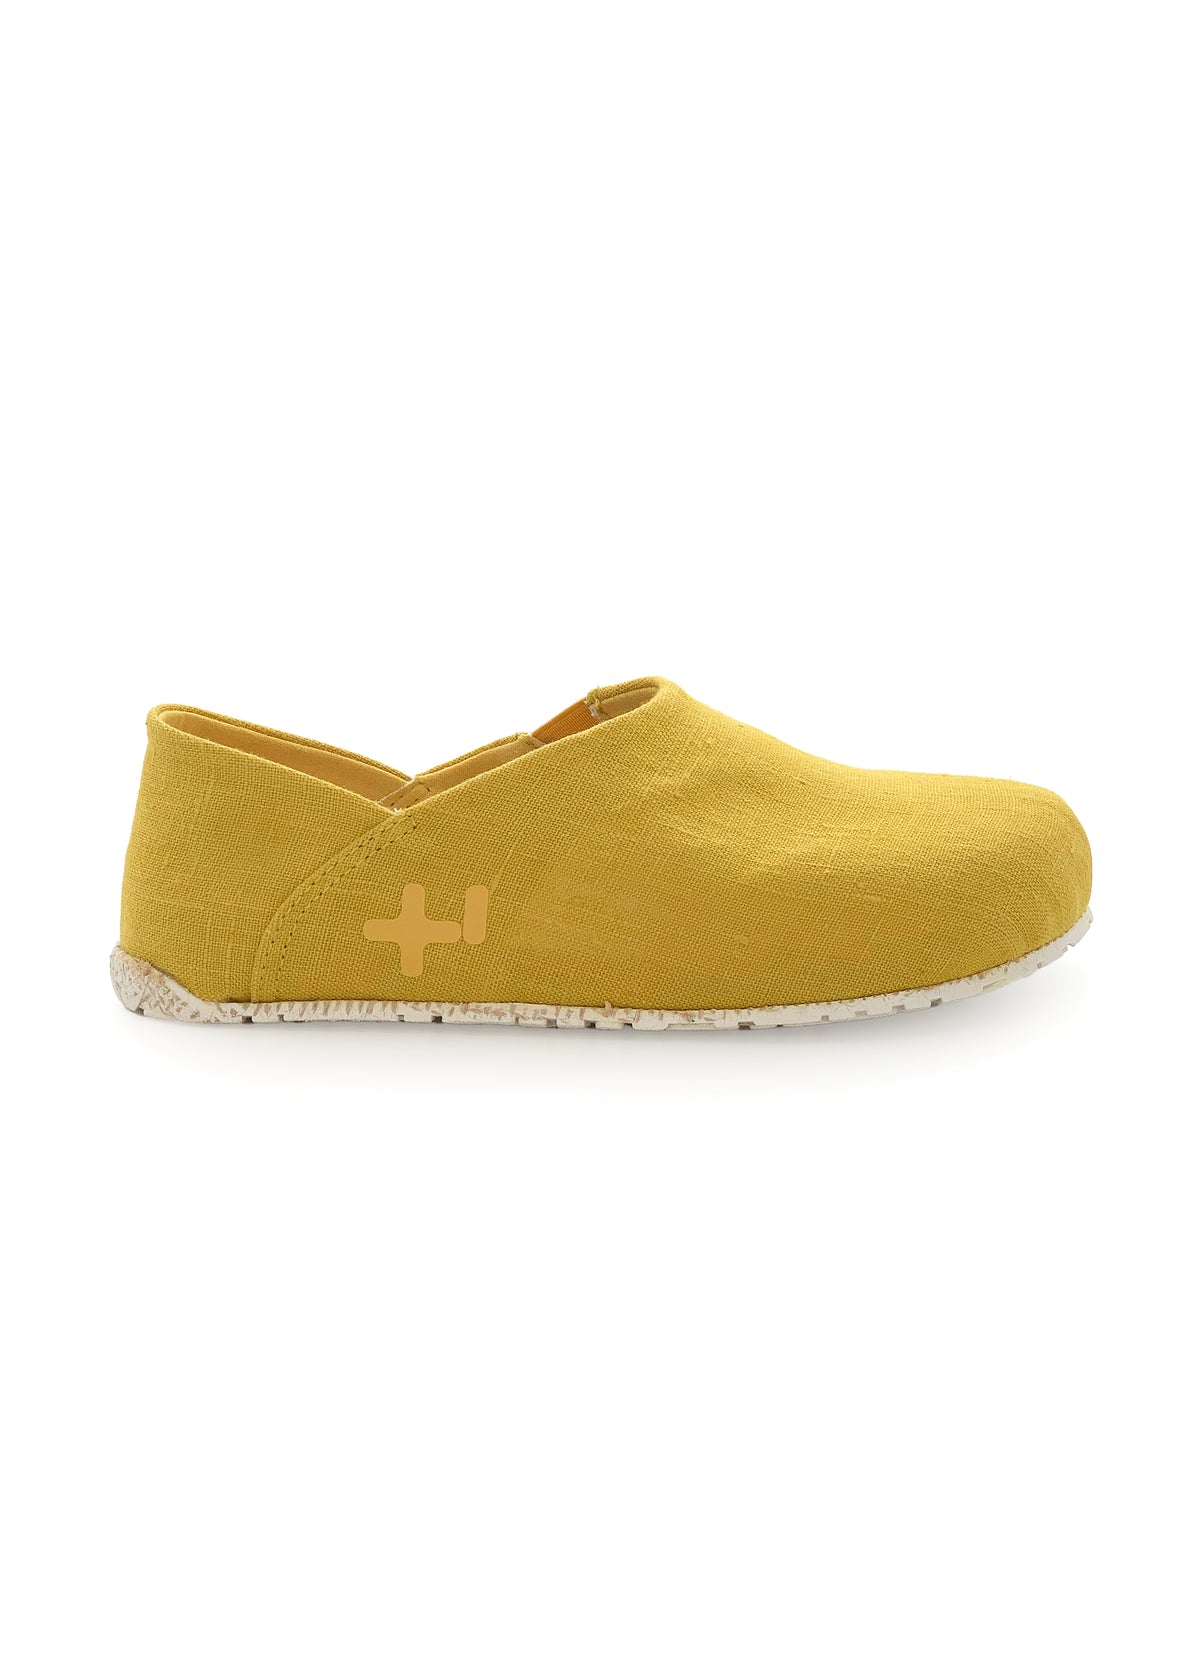 OTZ shoes - yellow linen fabric